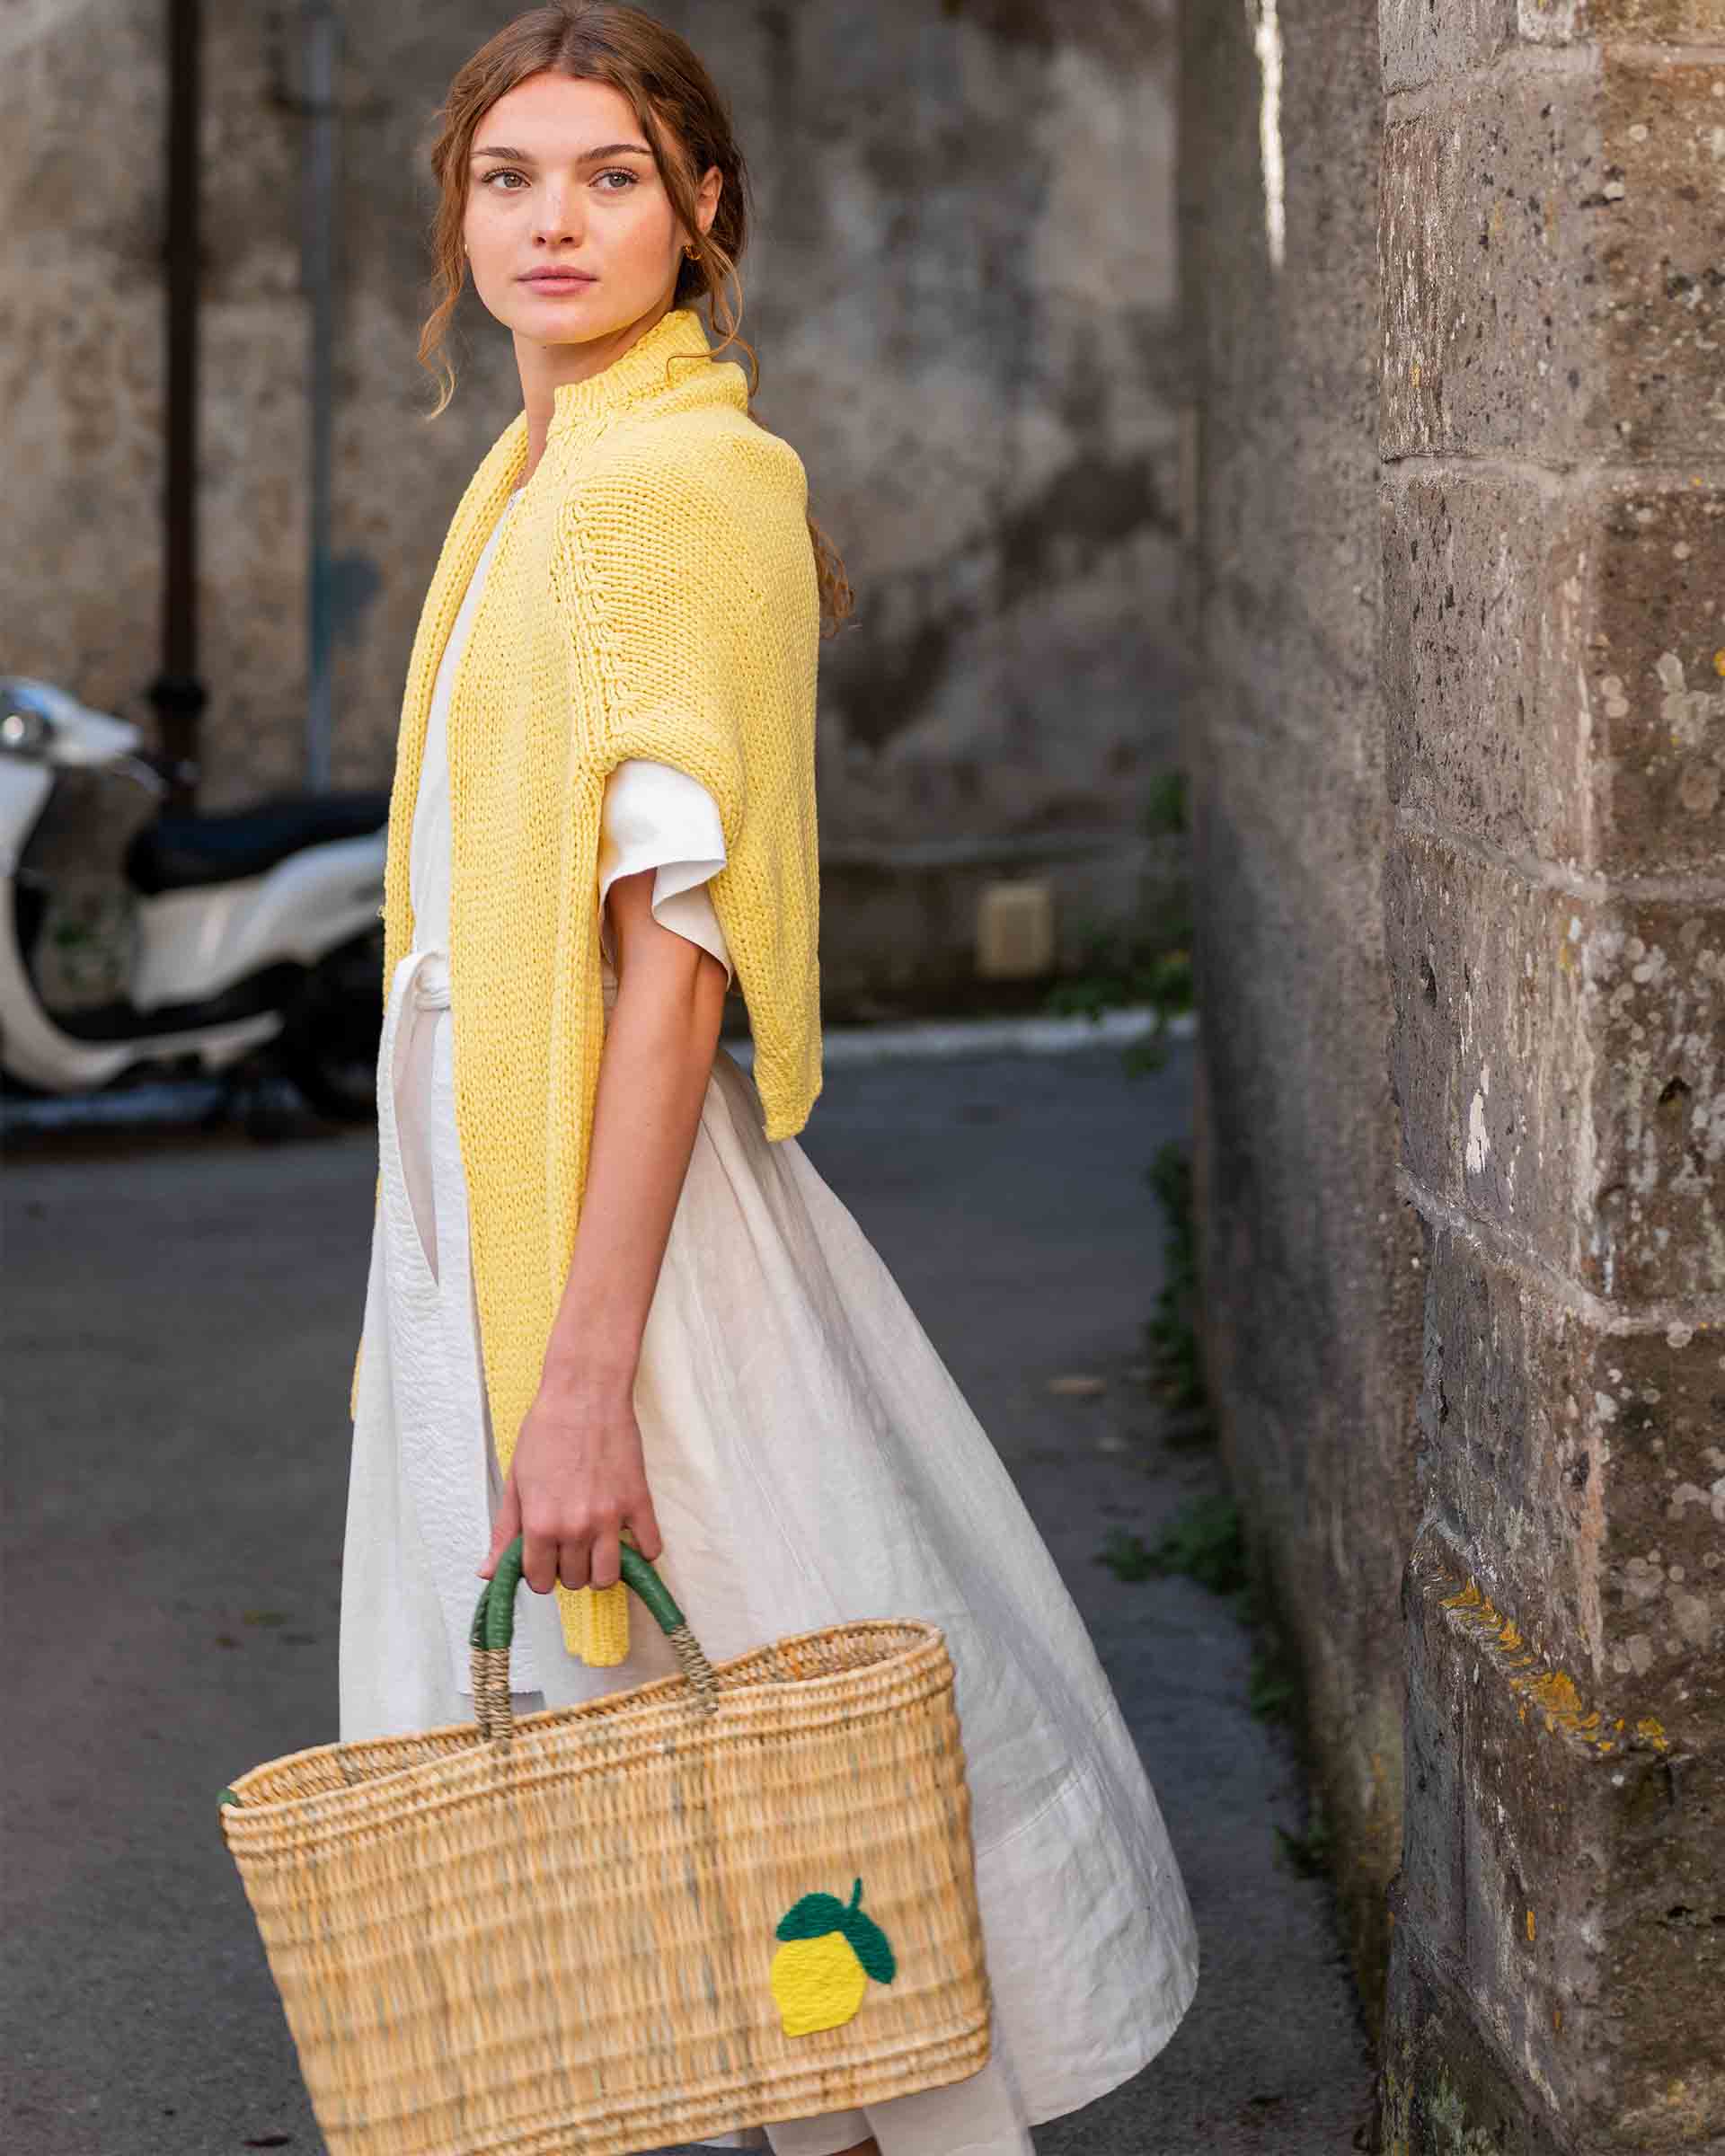 female holding medium sized straw basket with handwoven lemon walking in the street